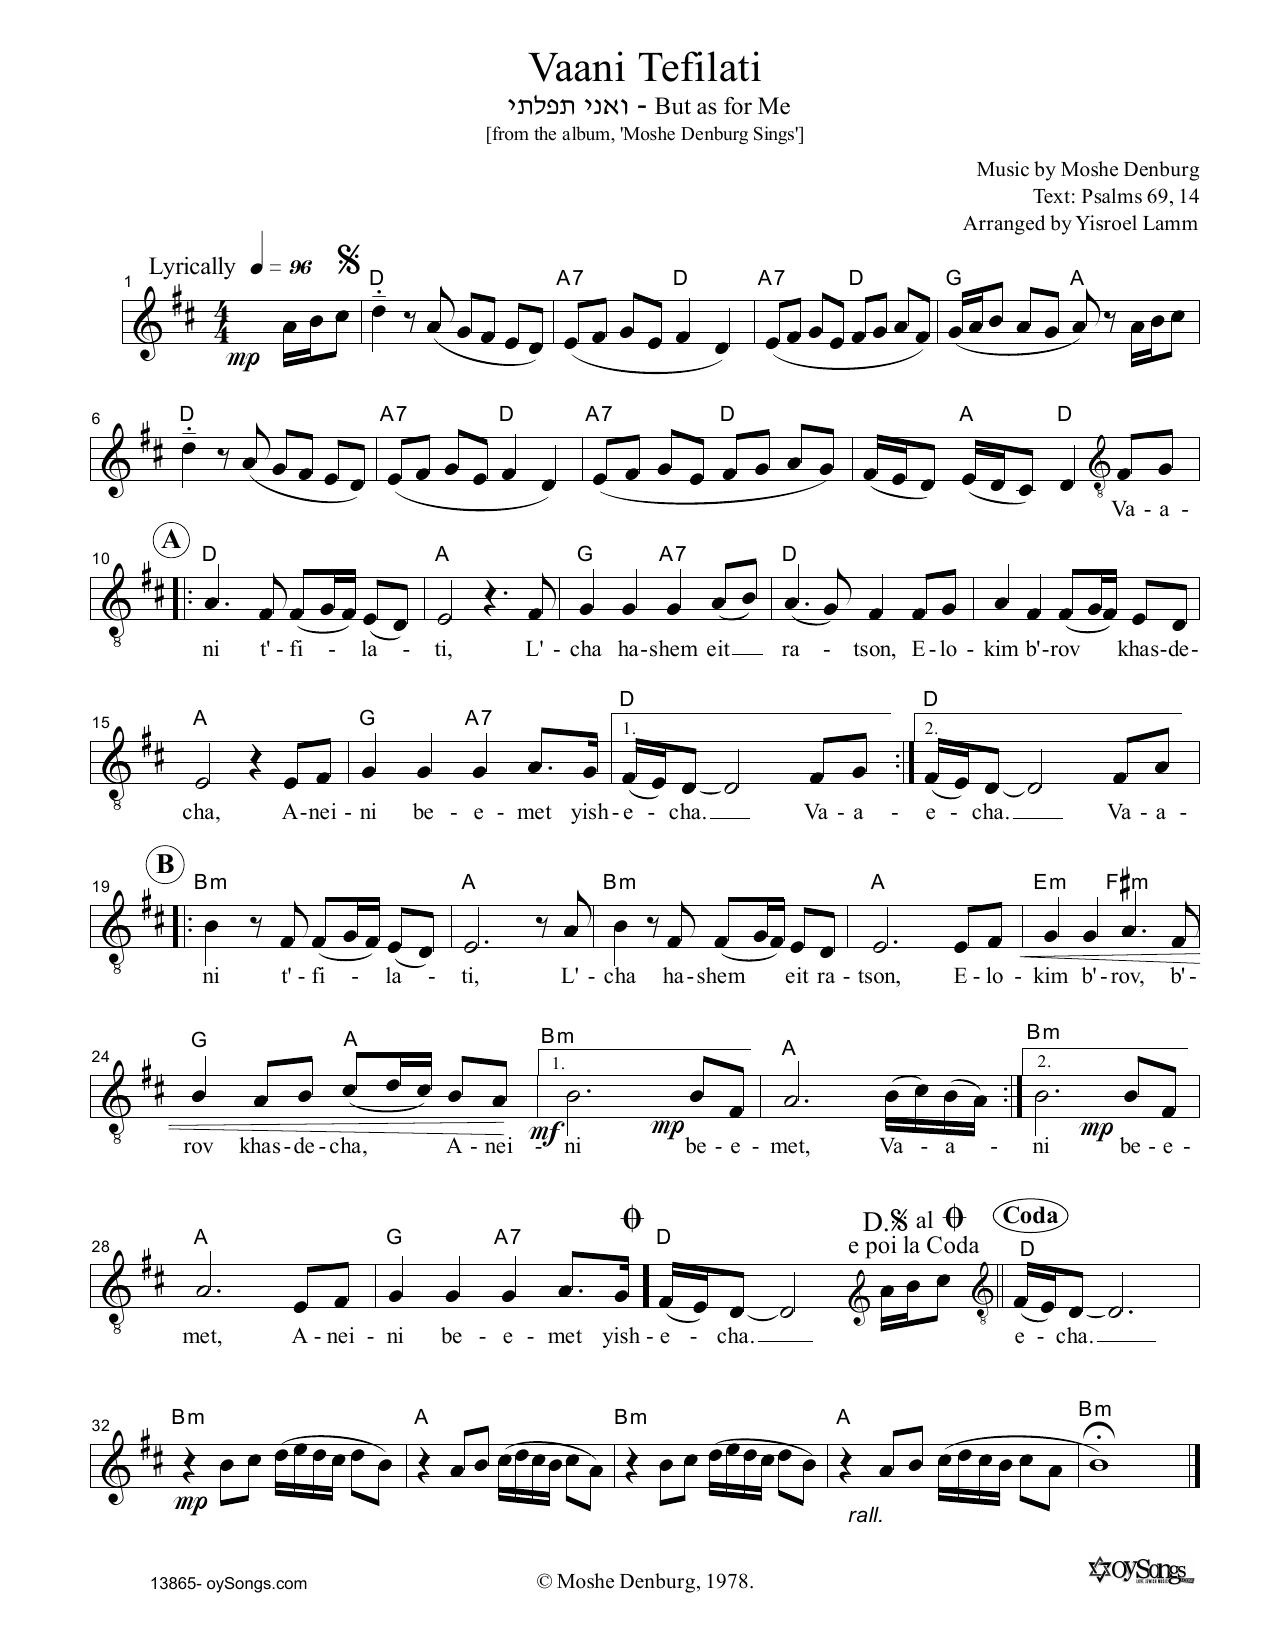 Download Moshe Denburg Vaani Tefilati Sheet Music and learn how to play Melody Line, Lyrics & Chords PDF digital score in minutes